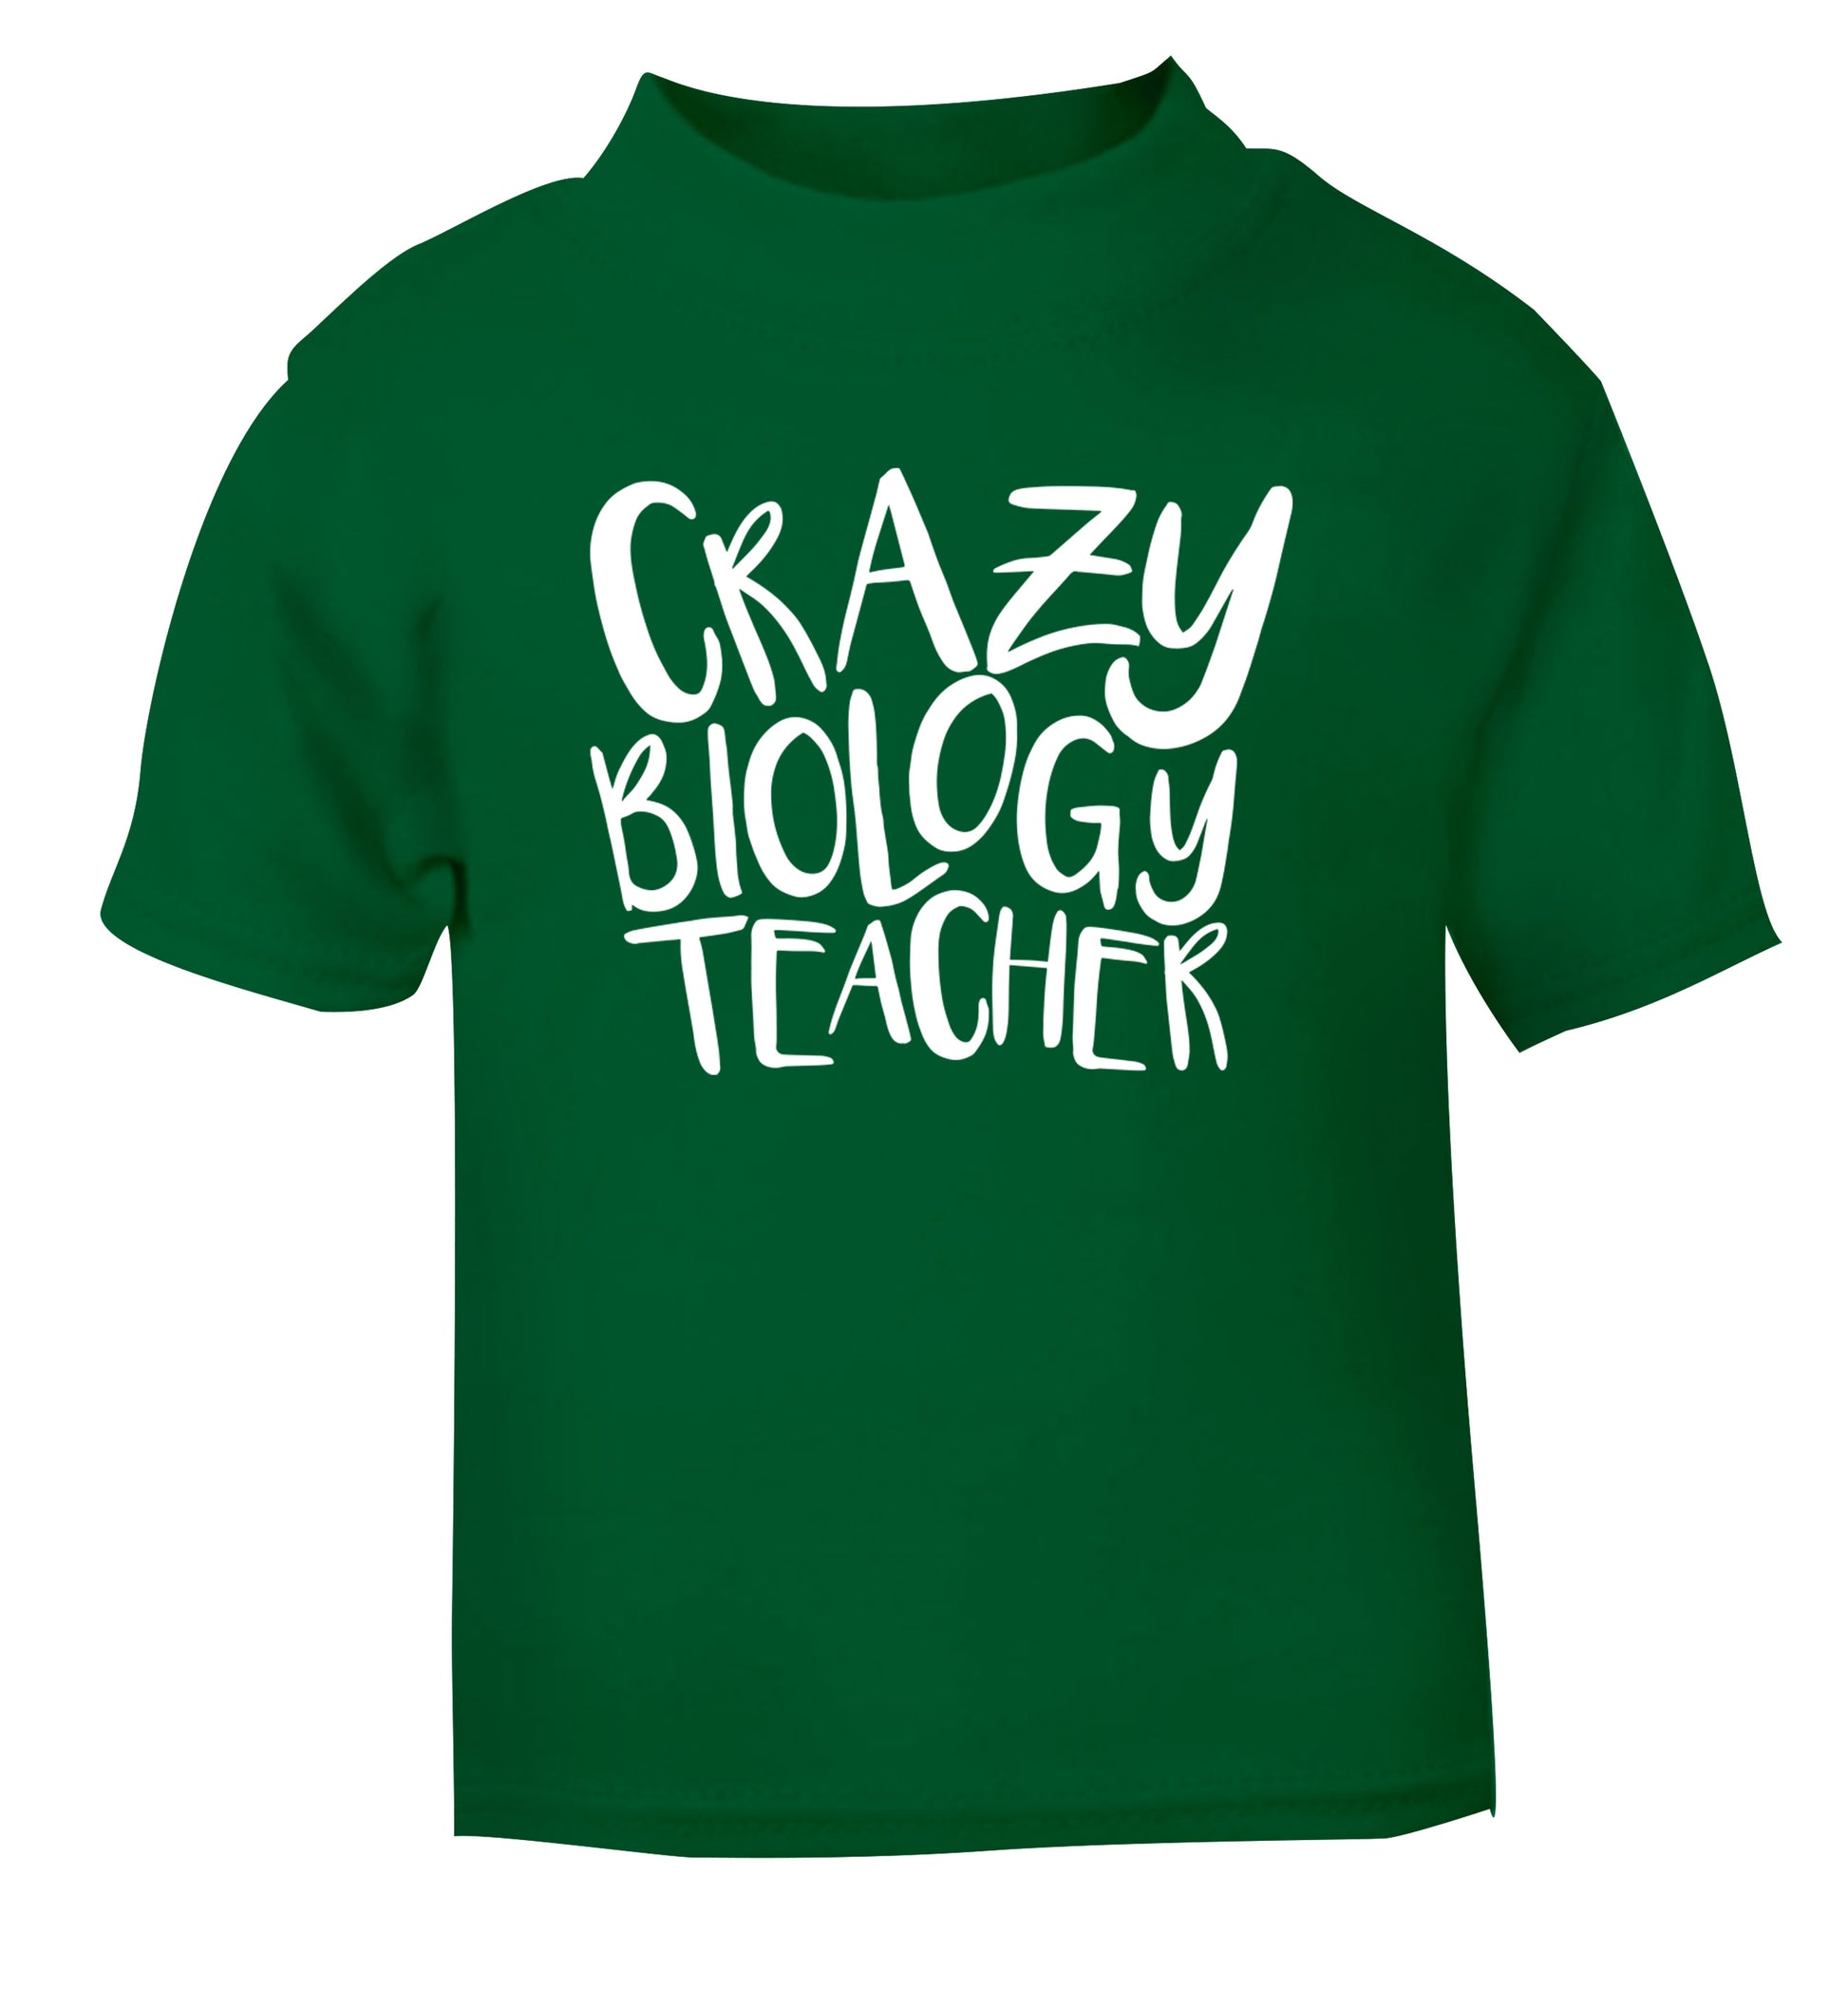 Crazy biology teacher green Baby Toddler Tshirt 2 Years